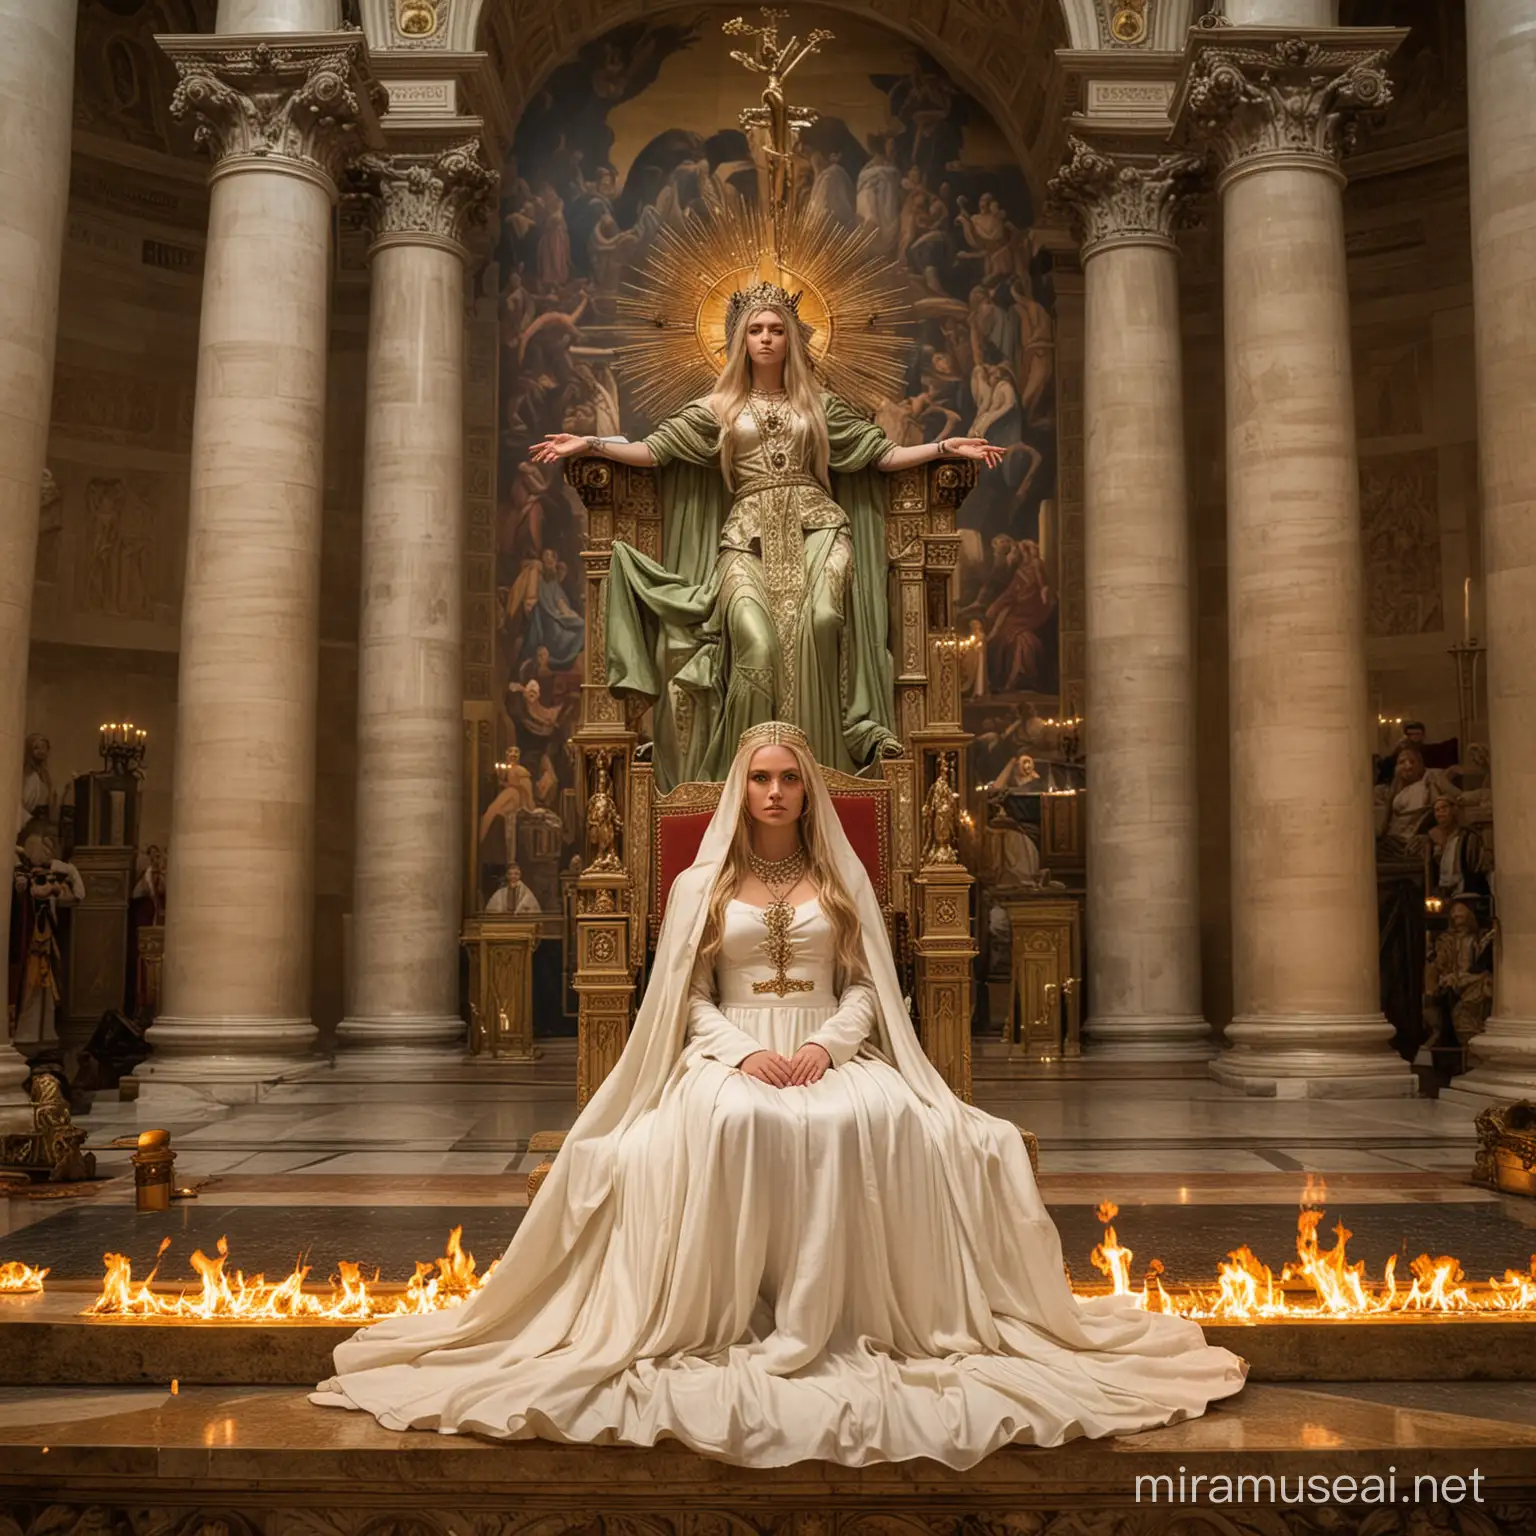 Majestic Teenage Empress Goddess Rebecca Reigns in Fiery Vatican Altar